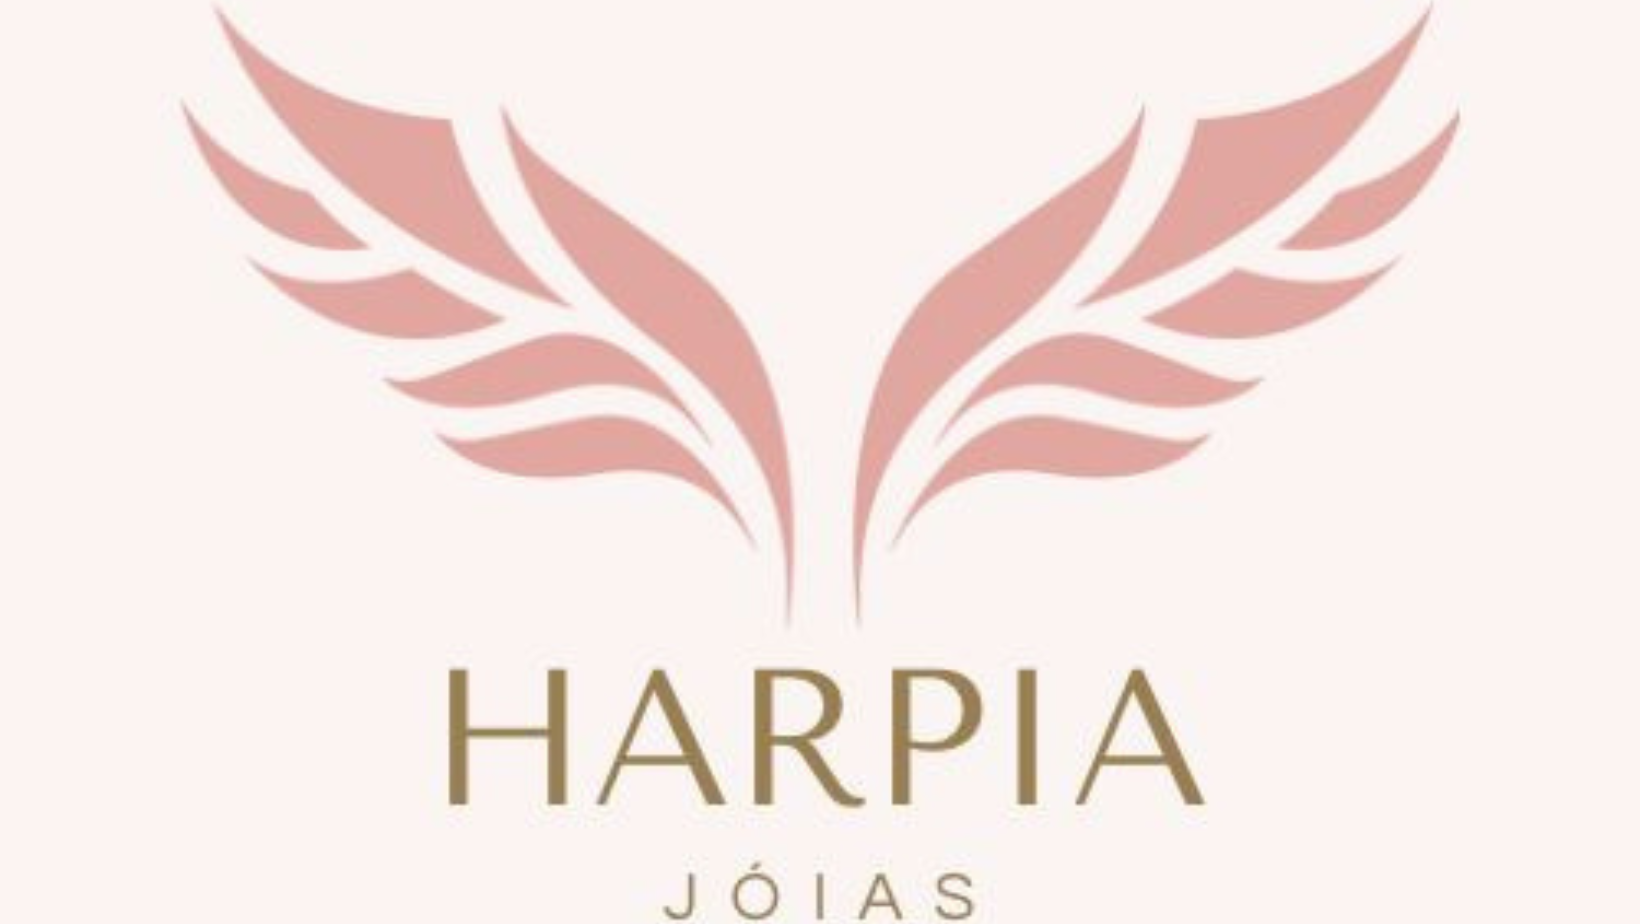 Harpia Joias